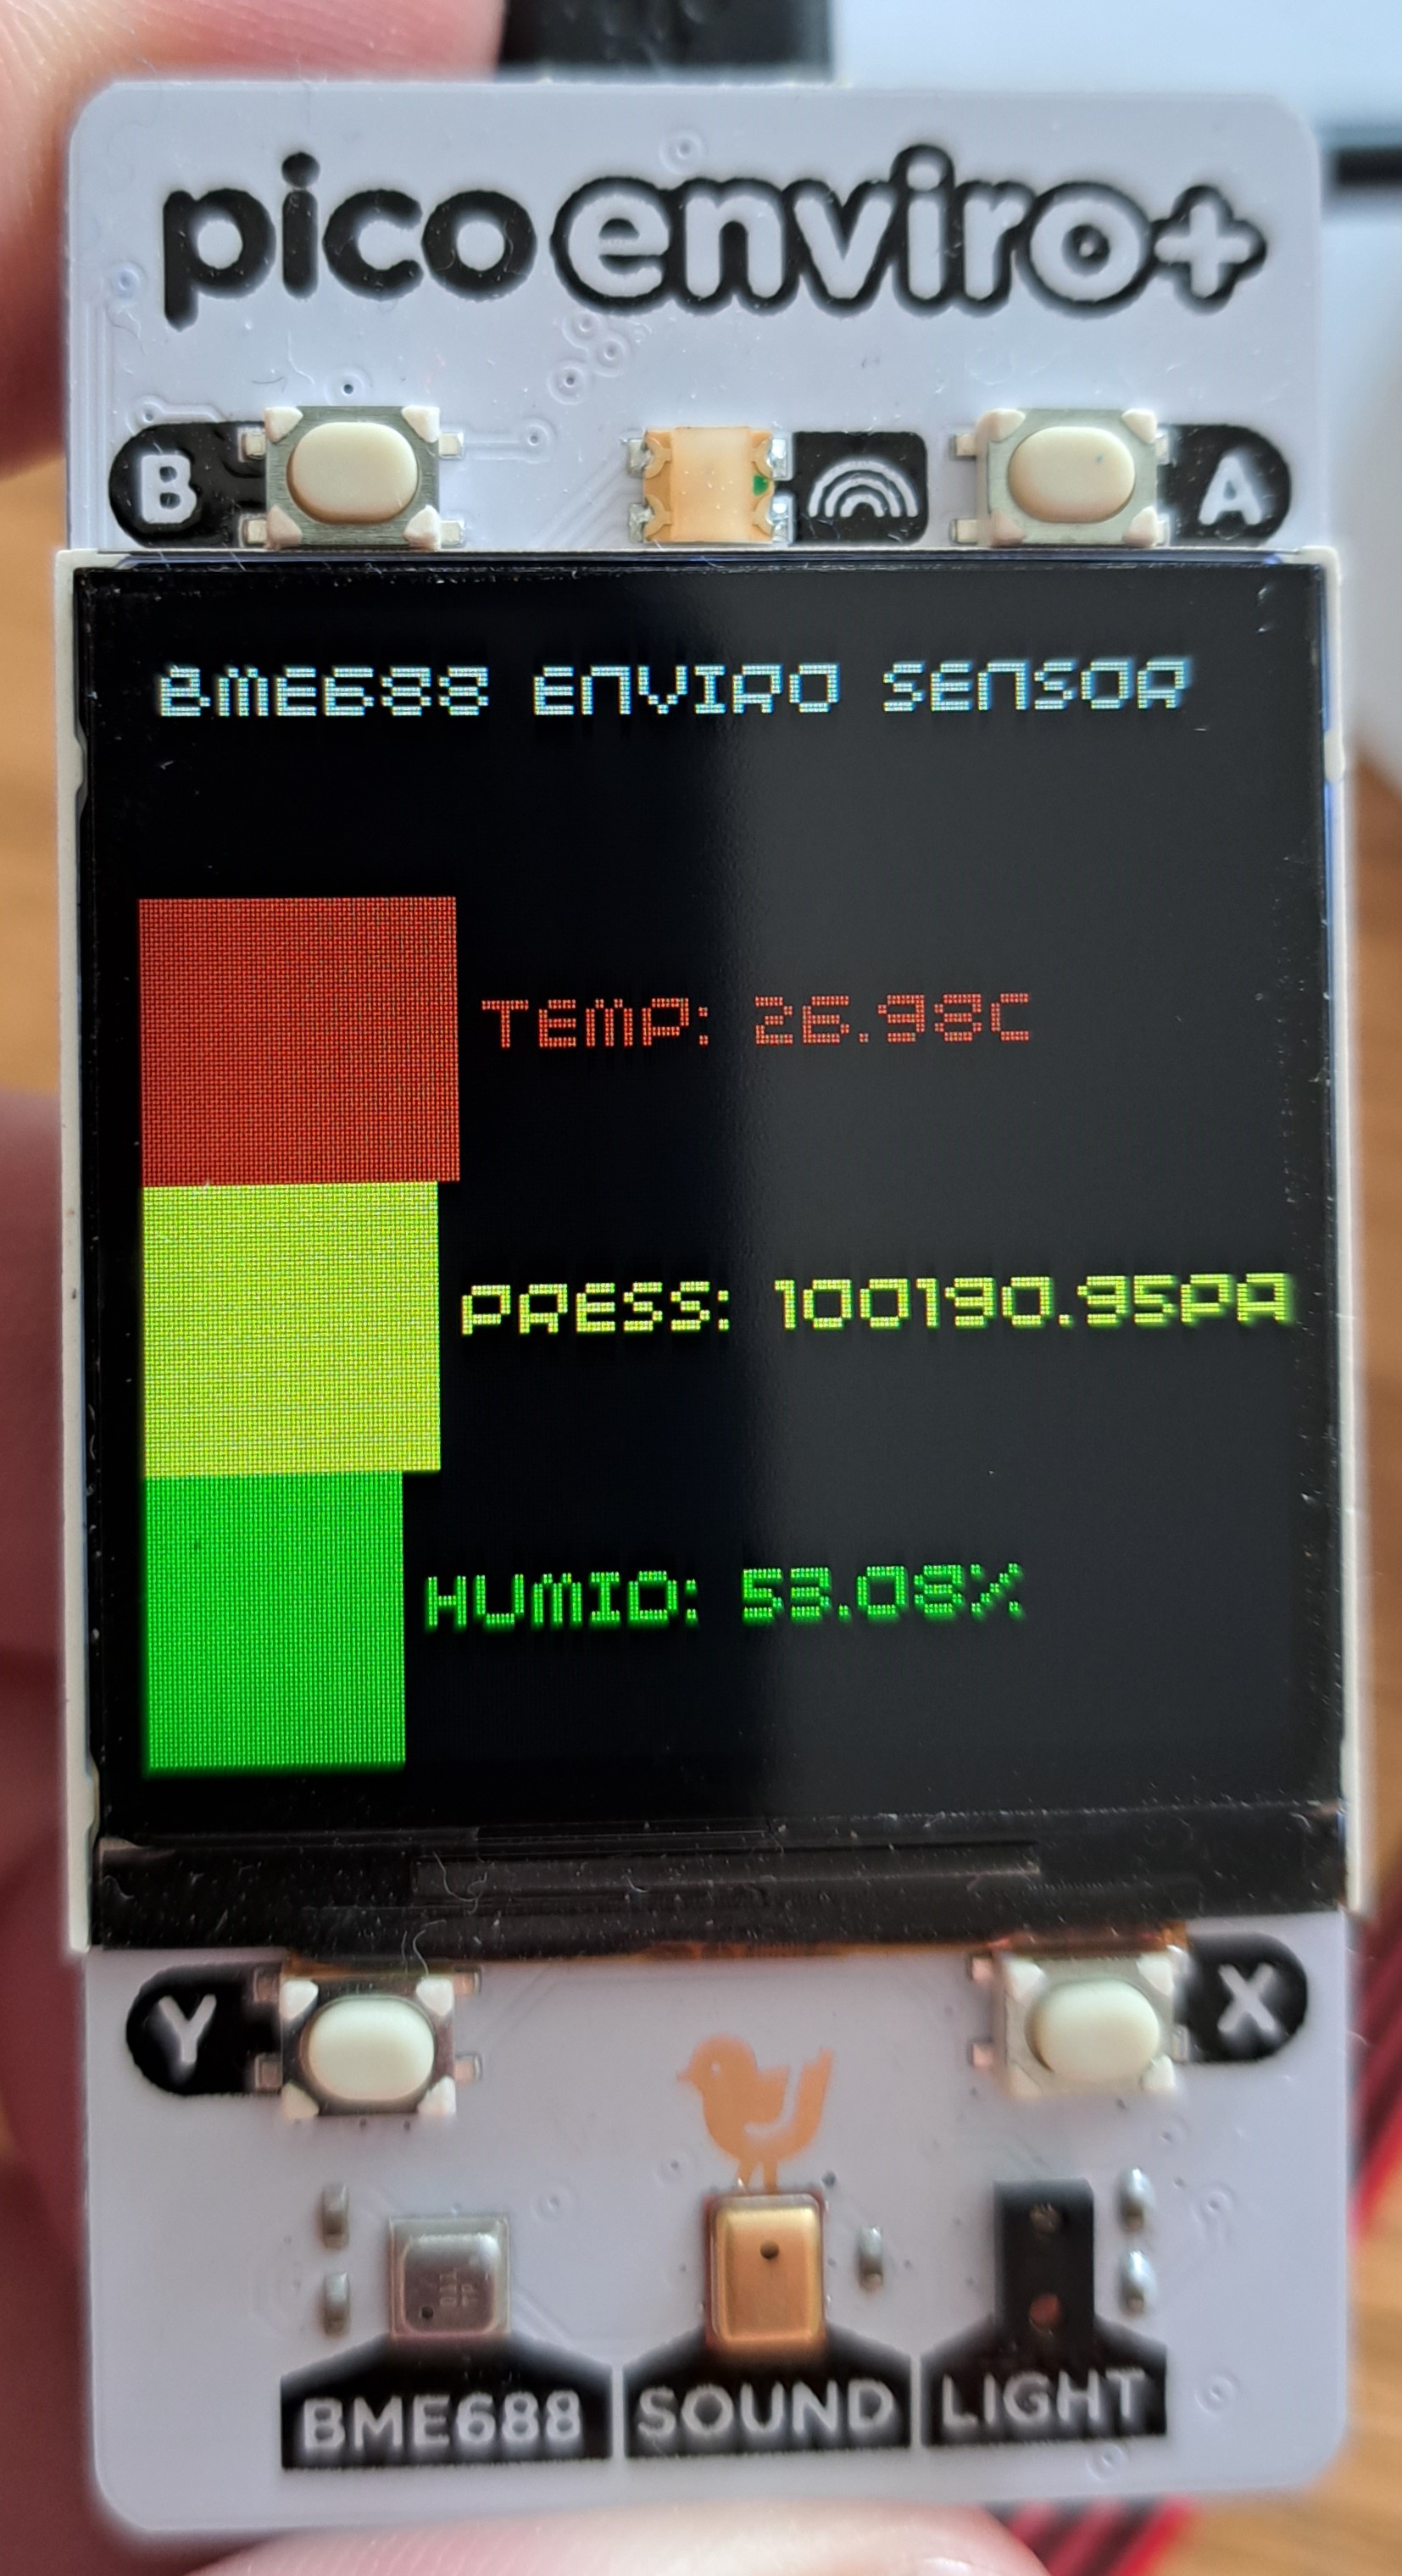 BME688 Sensor Data on Pico